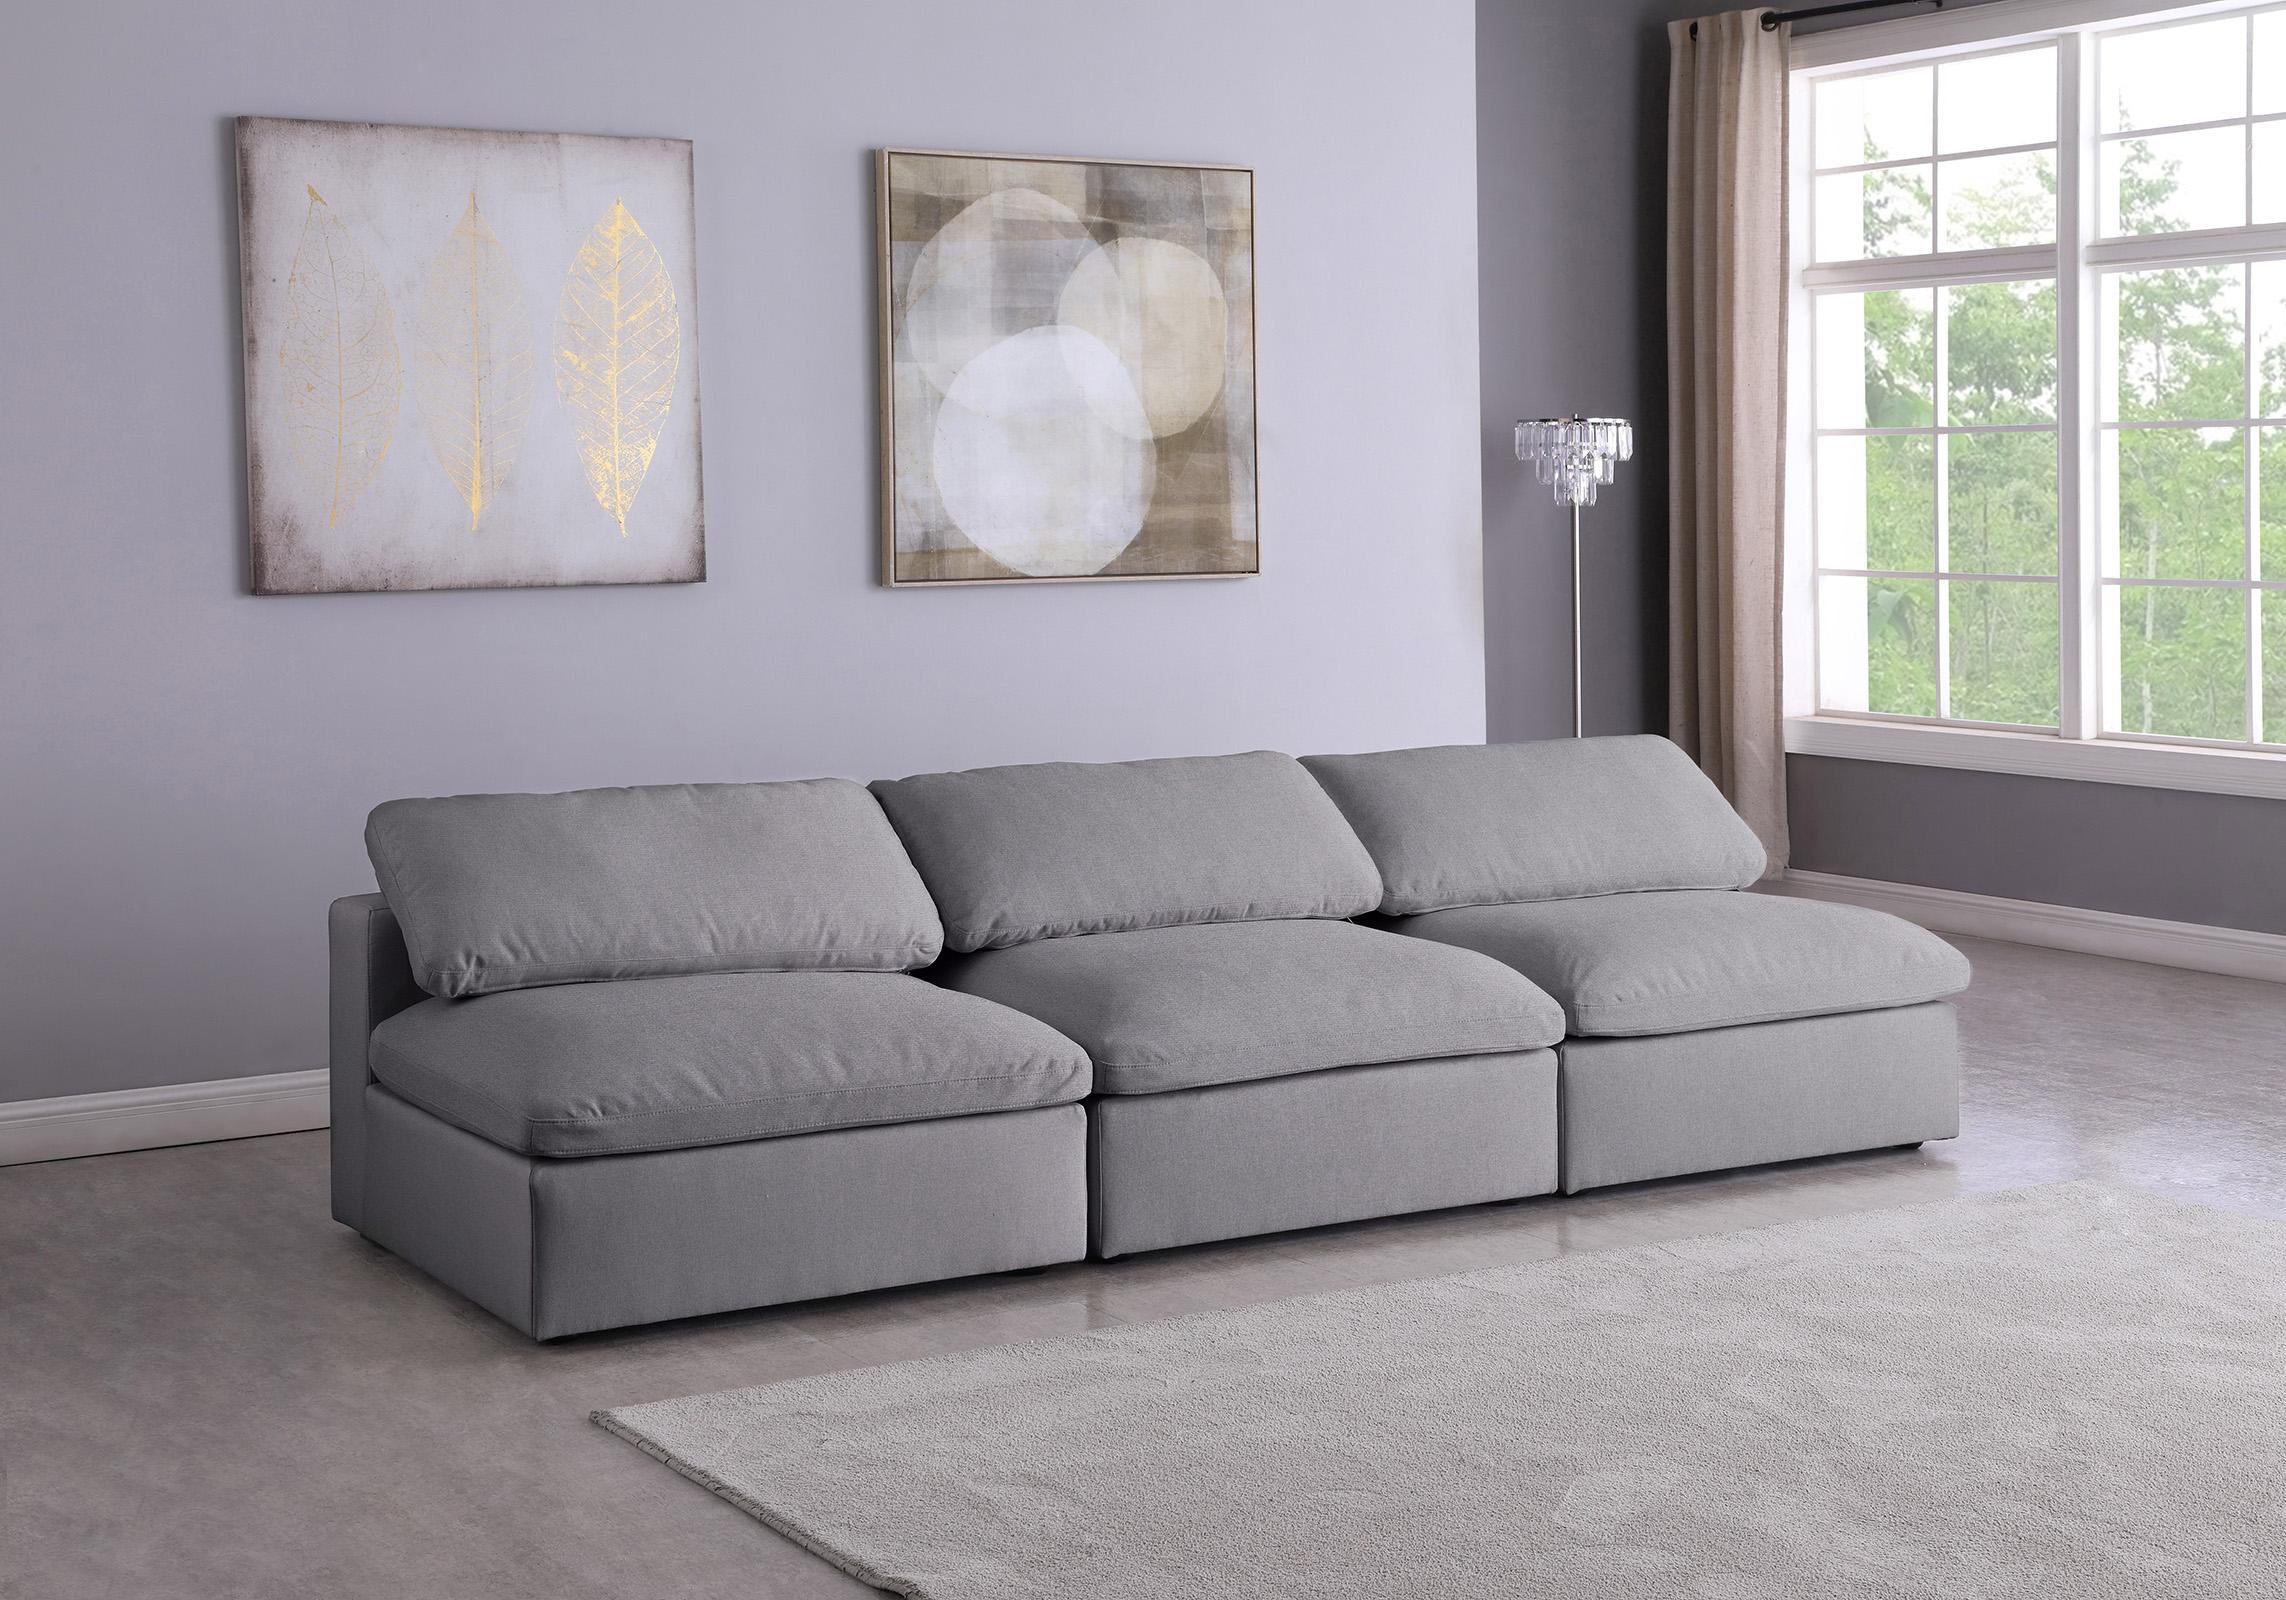 

    
Serene Grey Linen Textured Fabric Deluxe Comfort Modular Armless Sofa S117 Meridian
